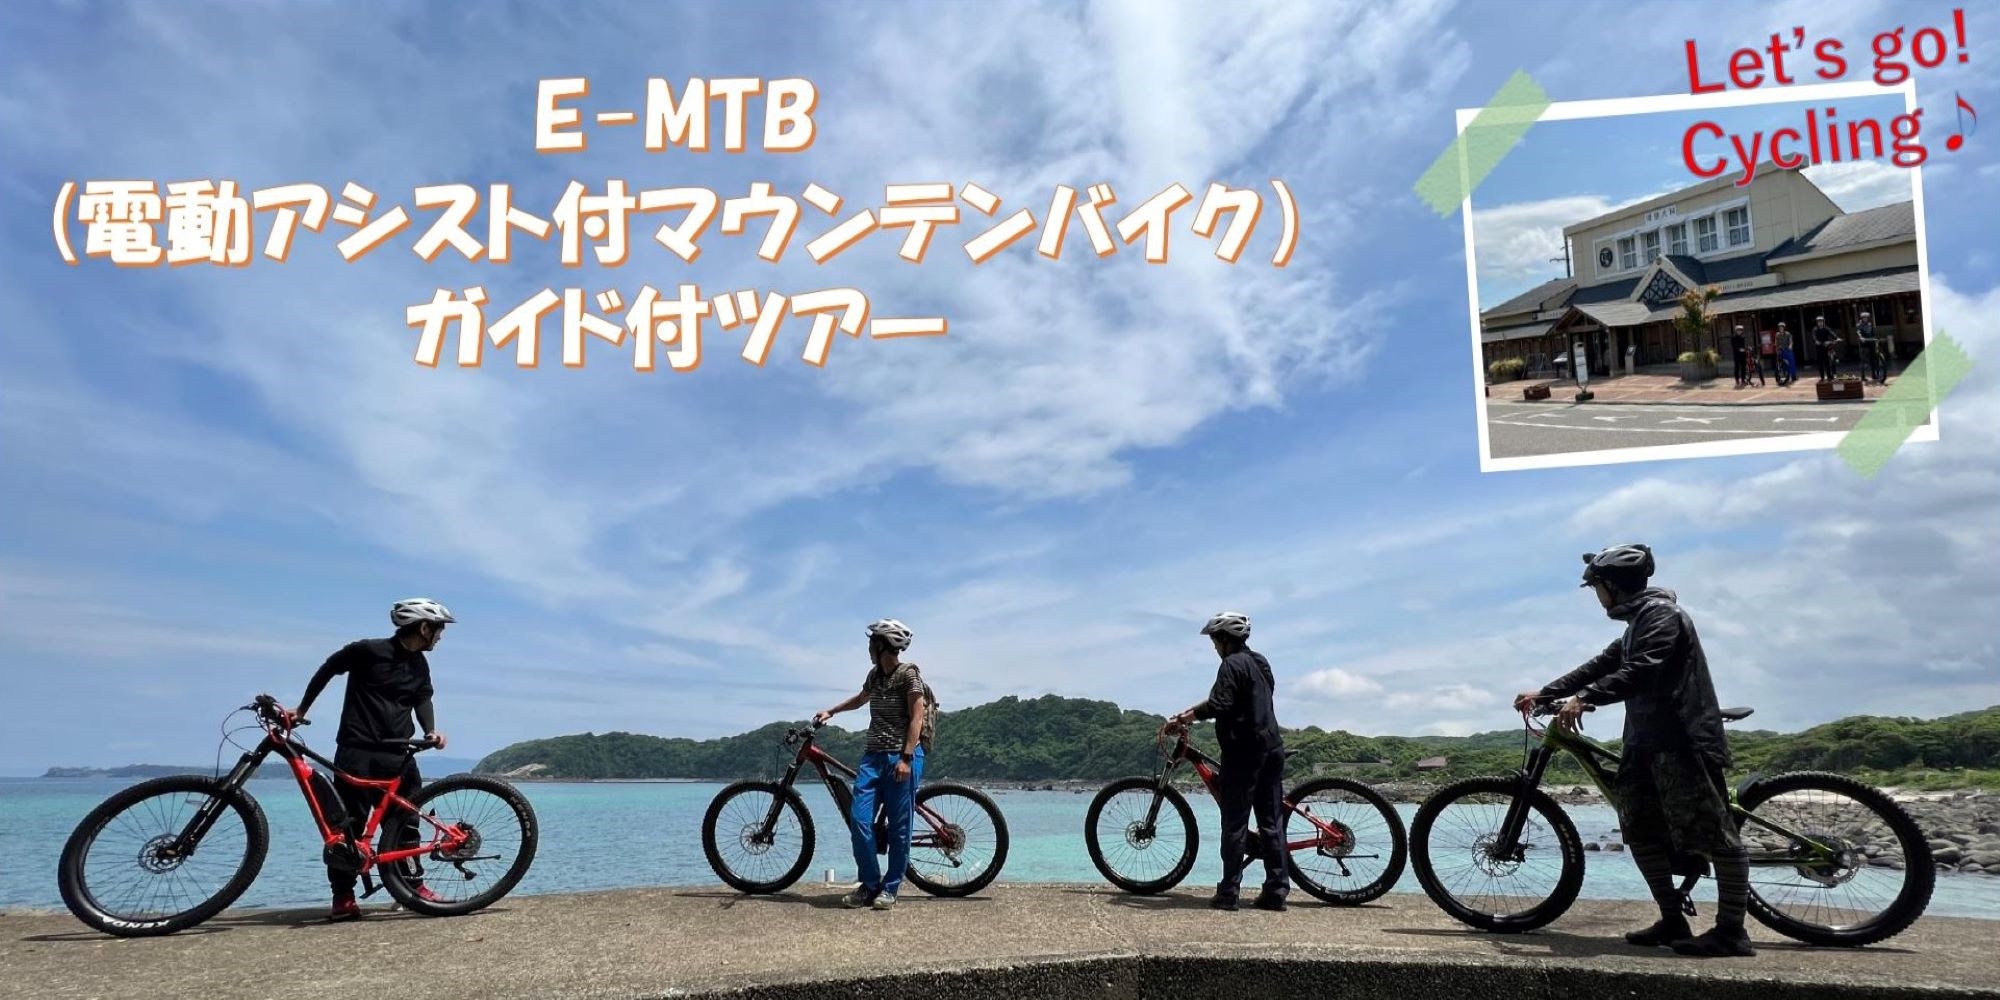 MTB E-bikeマウンテンバイクガイド付きサイクリングツアー